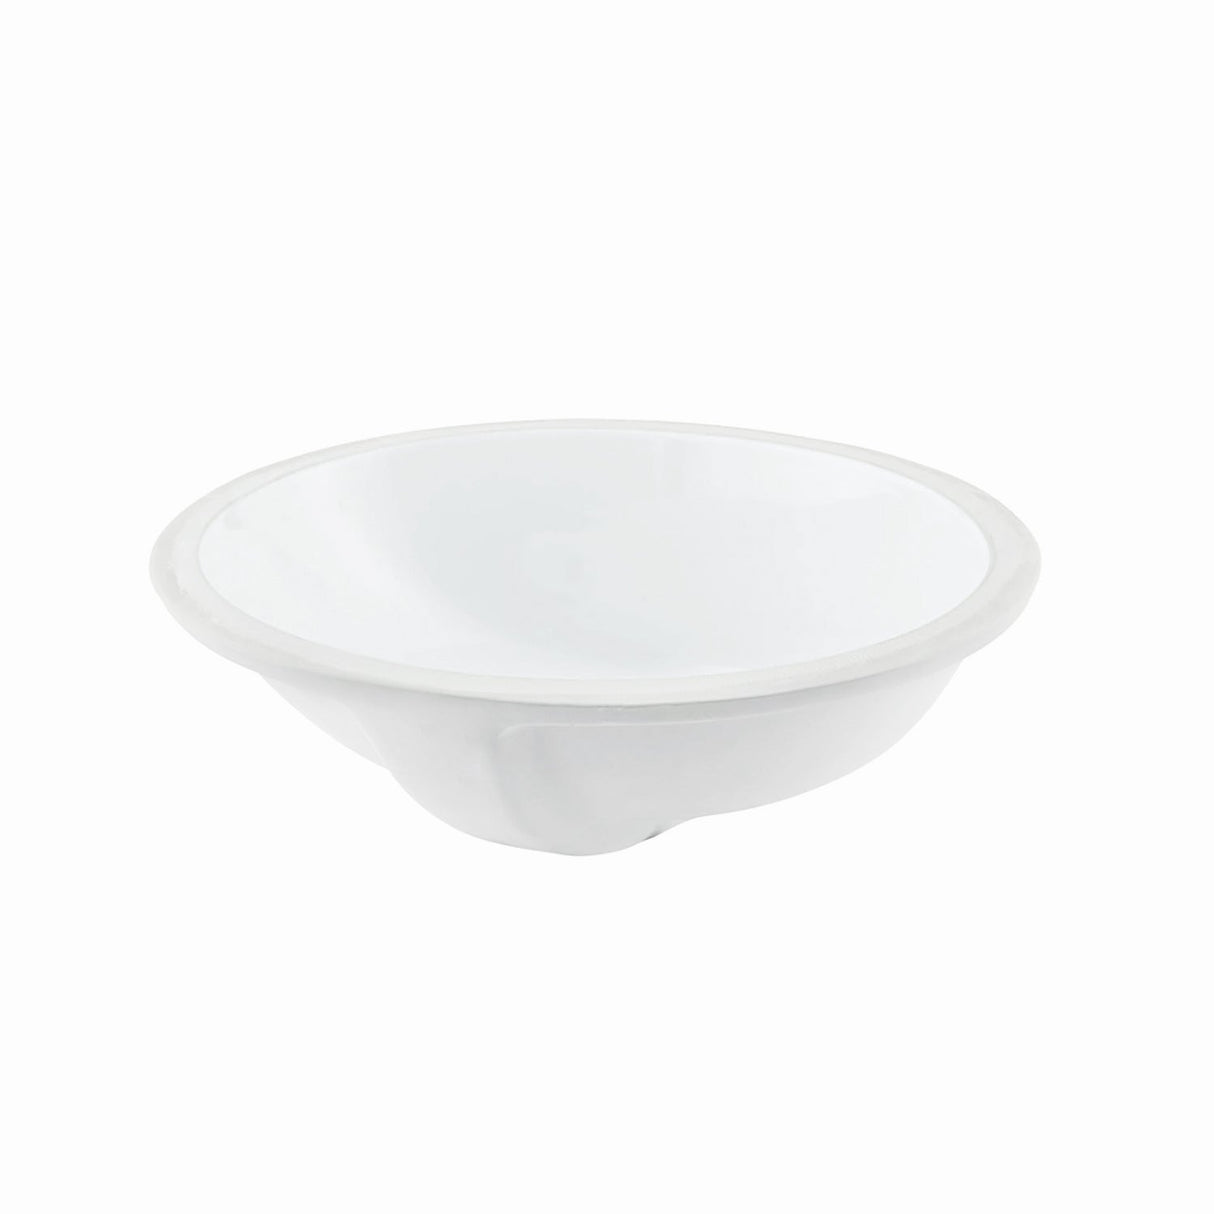 DAX Ceramic Oval Single Bowl Undermount Bathroom Basin, White BSN-100